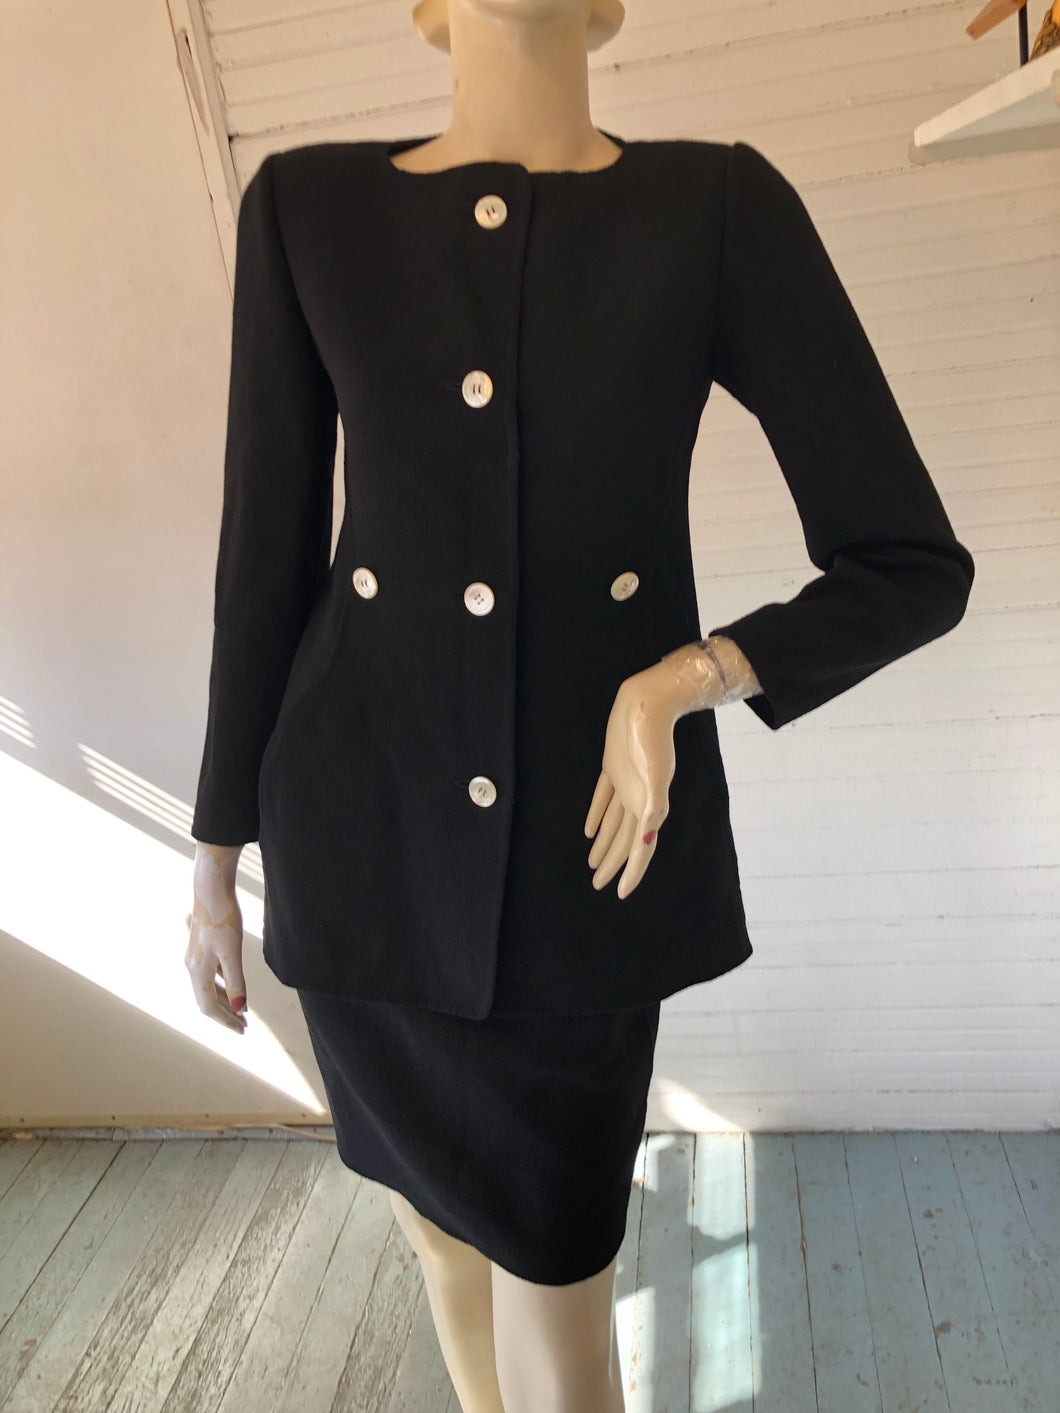 Geoffrey Beene Vintage 1980s-90s Black Skirt Suit, size S (34-26-34)